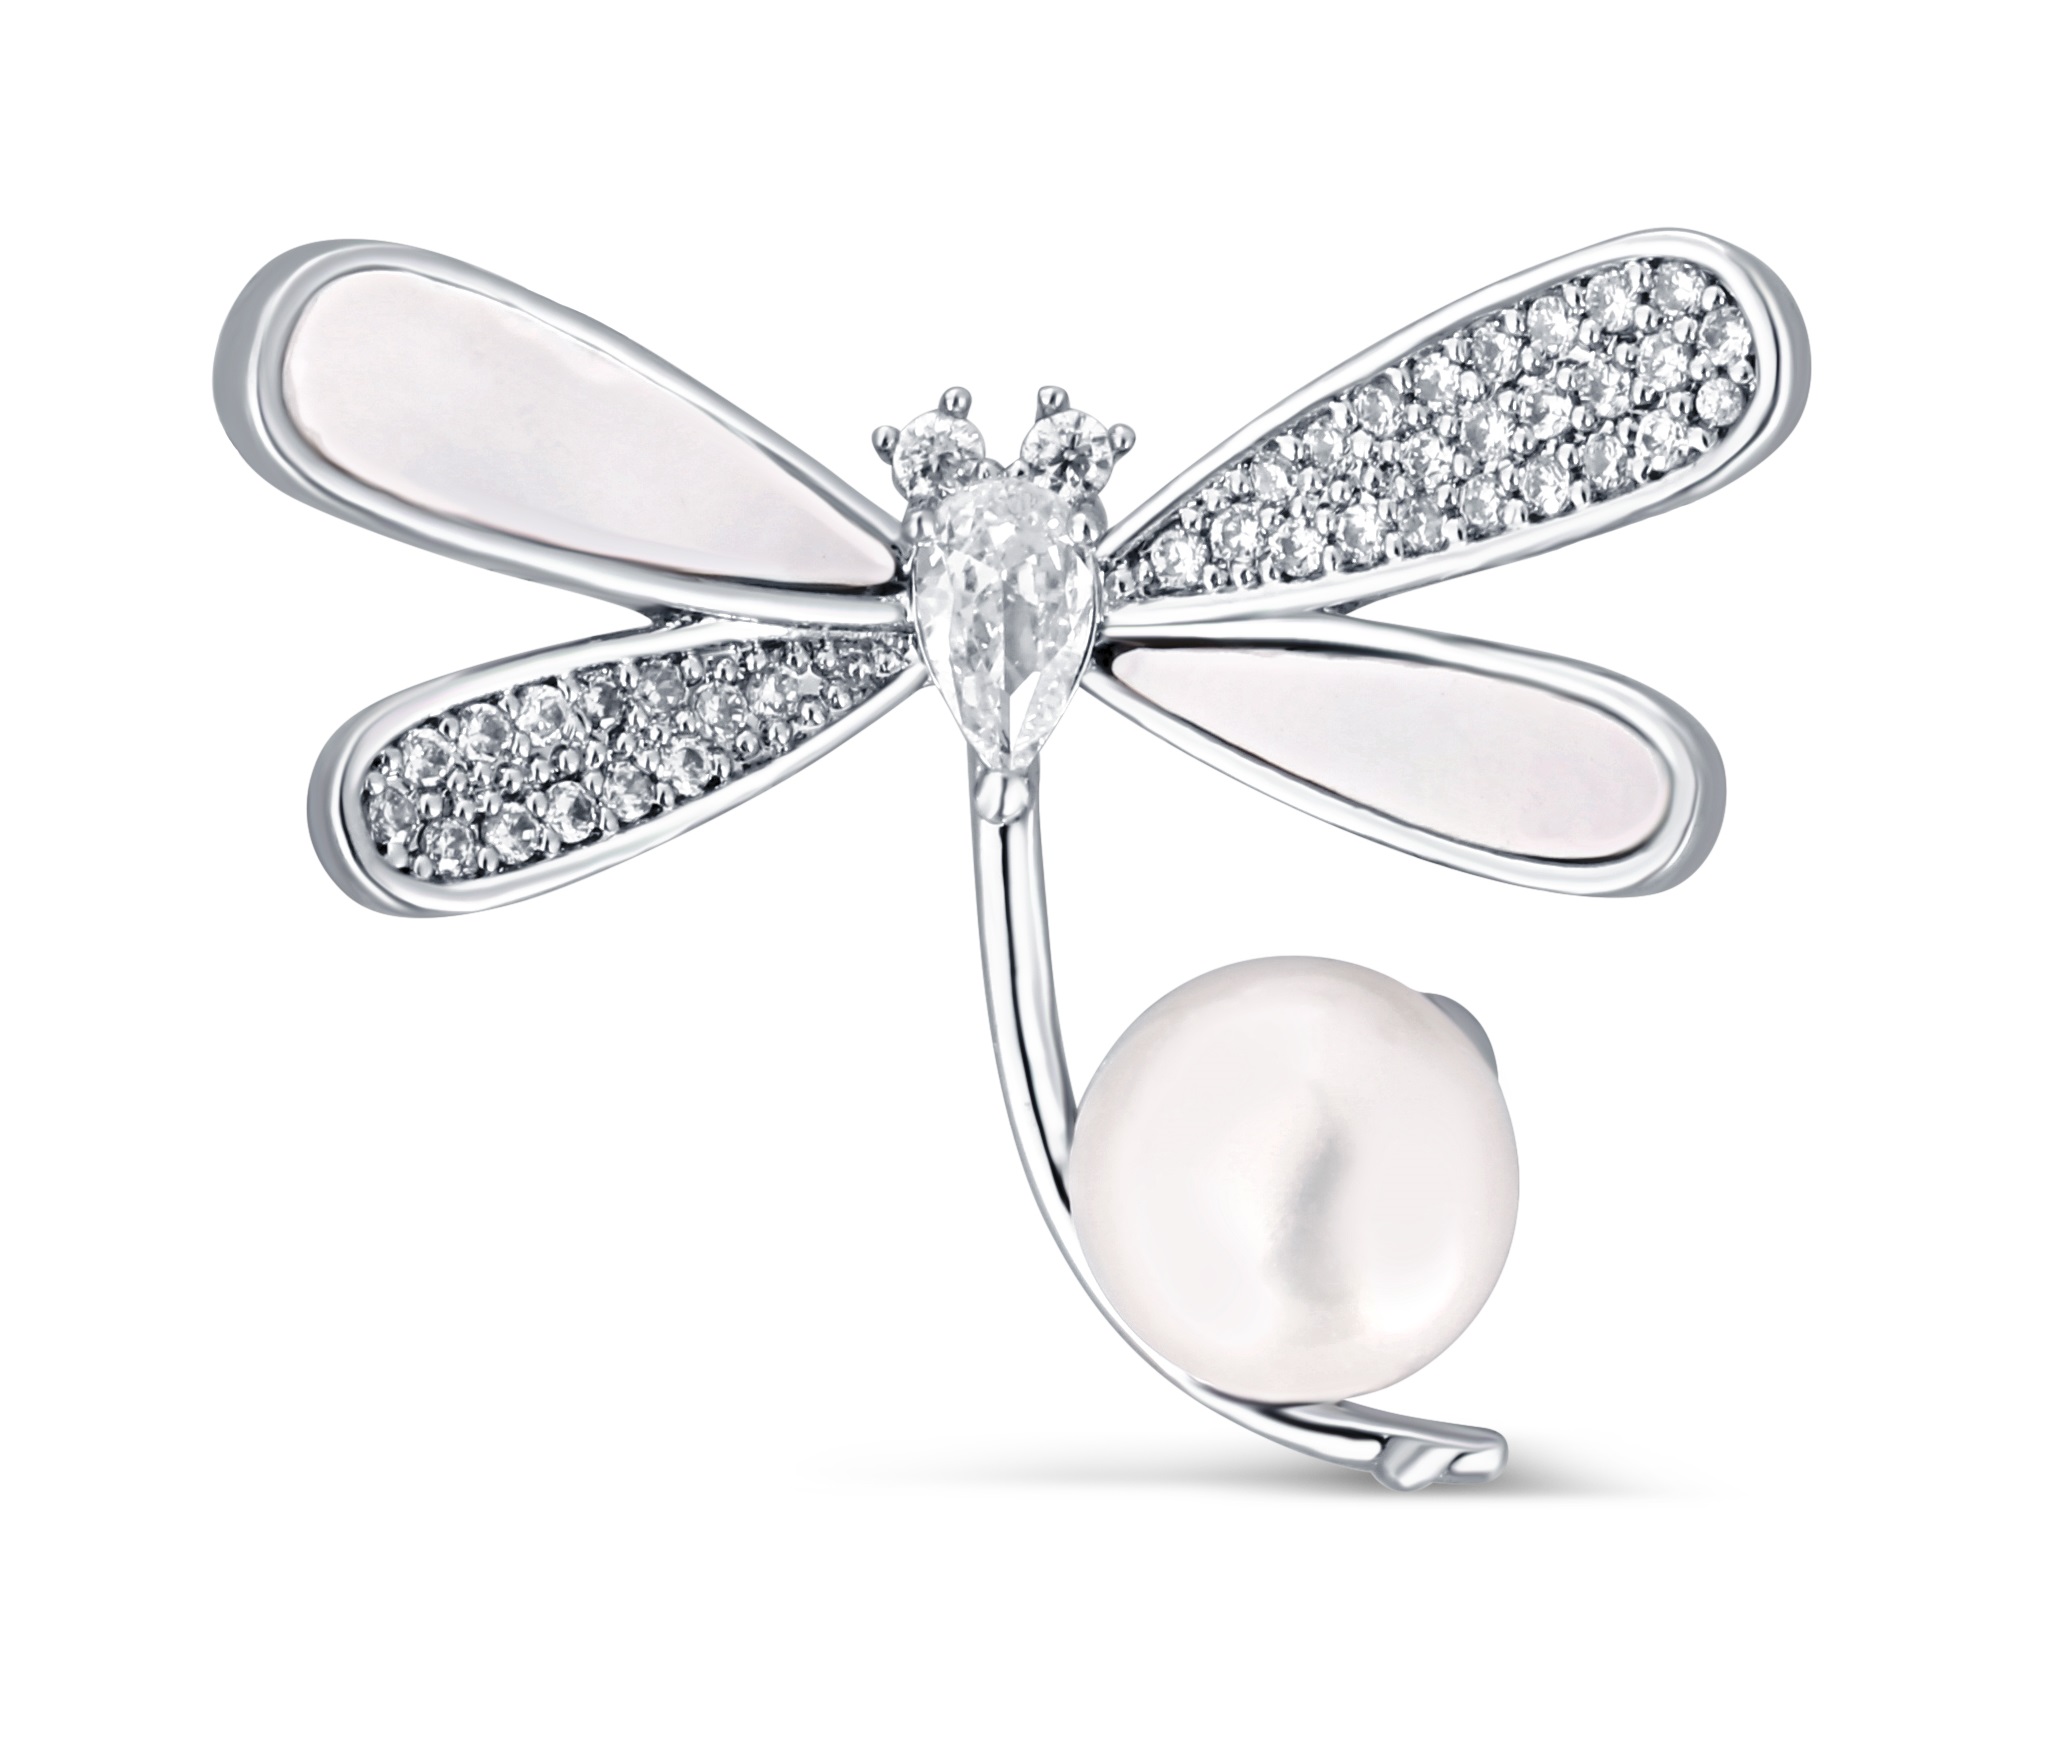 JwL Luxury Pearls Třpytivá brož vážka s pravou perlou a krystaly JL0763